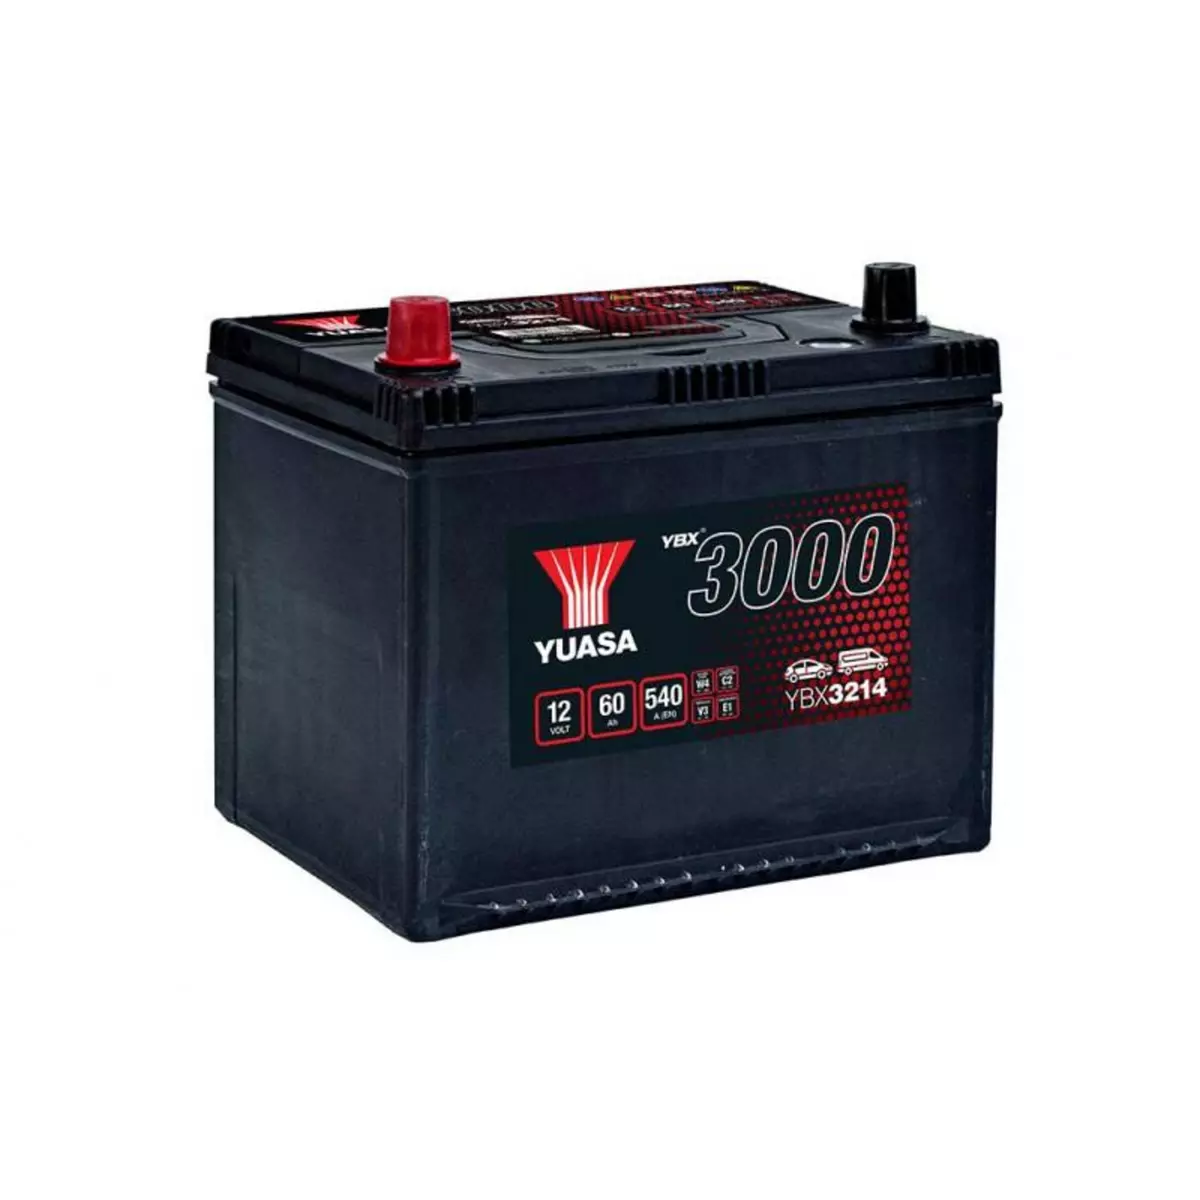 YUASA Batterie Yuasa SMF YBX3214 12V 60ah 540A D23G